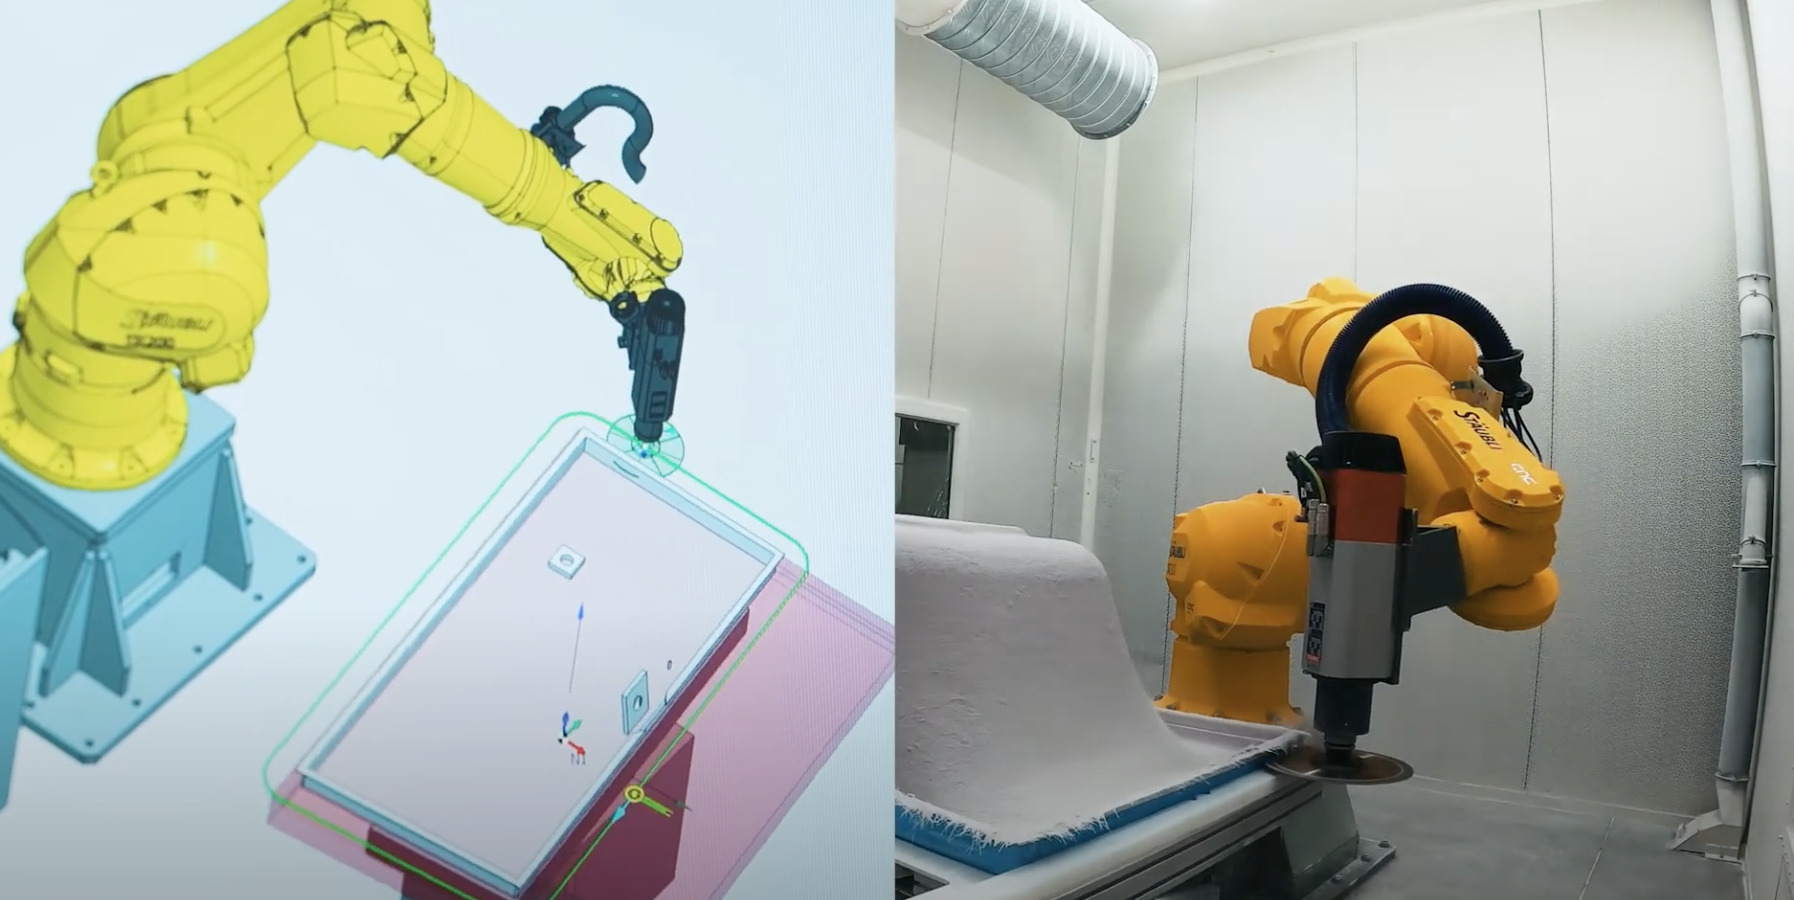 SprutCAM X Robot for bathtub production